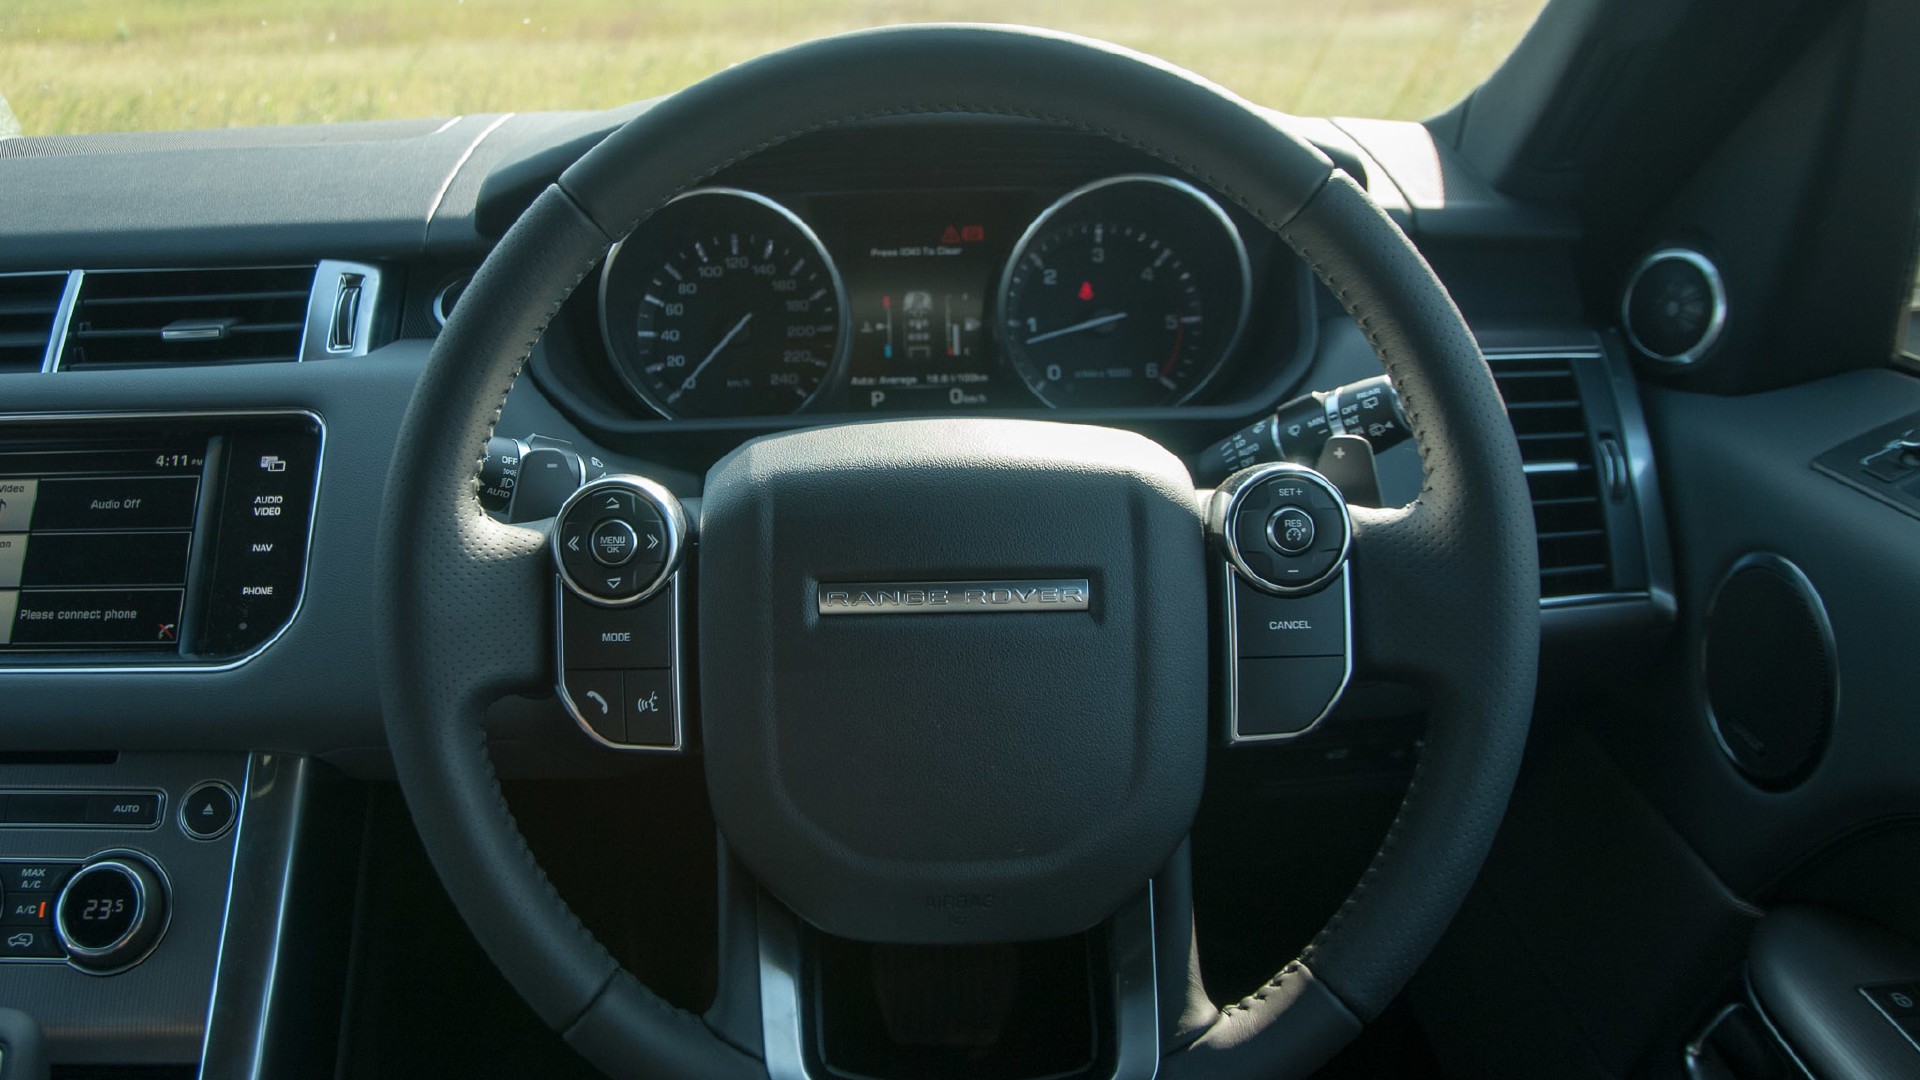 Steering Wheel Image, Land Rover Range Rover Sport Photo - CarWale